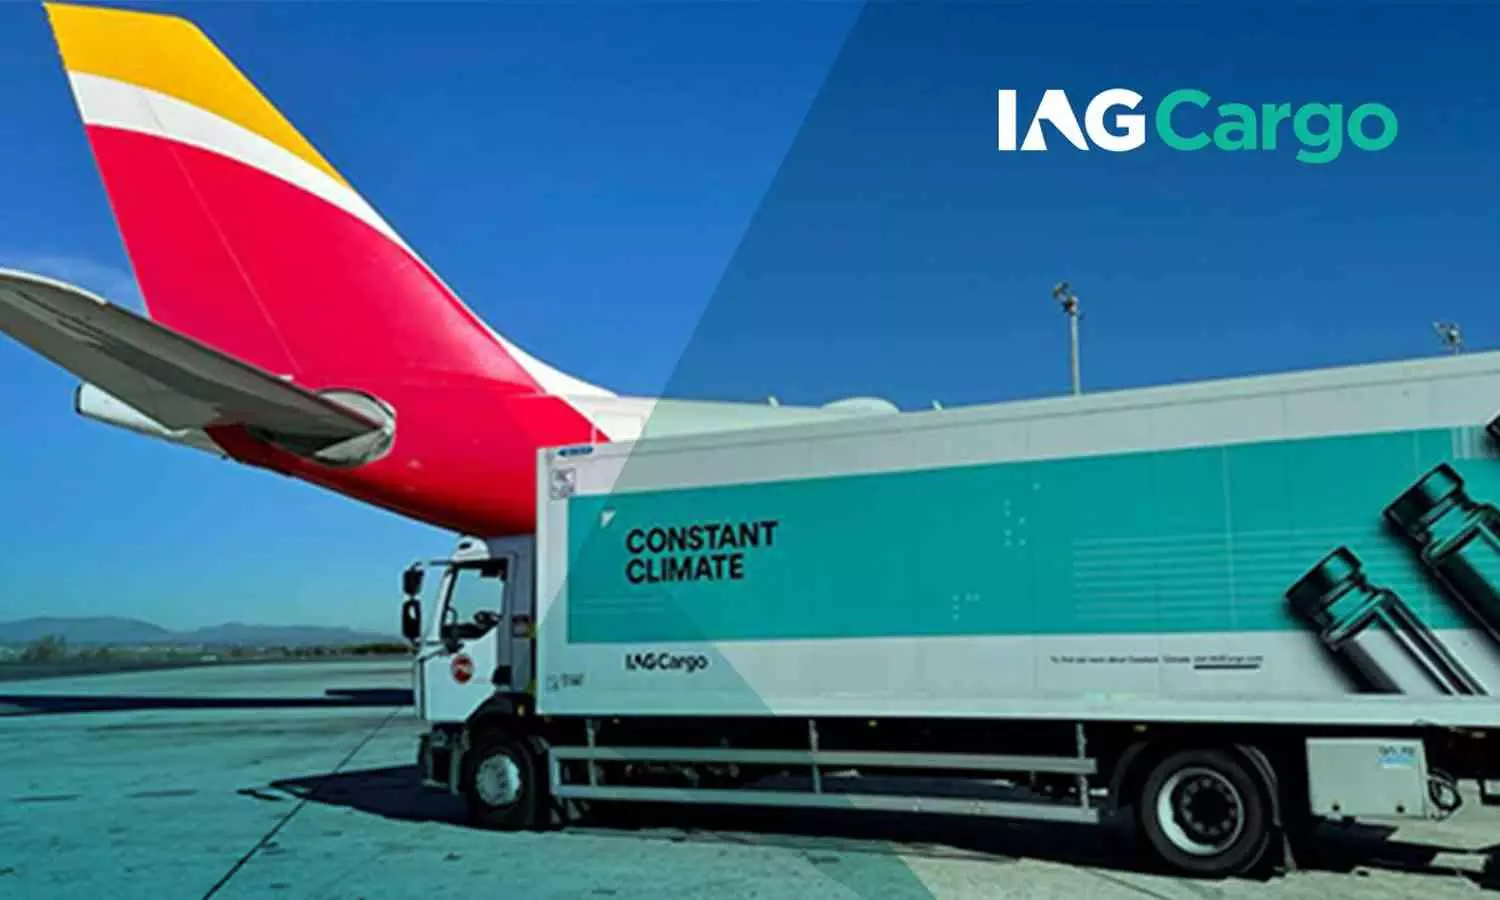 IAG Cargo joins Neutral Air Partner as an airline partner